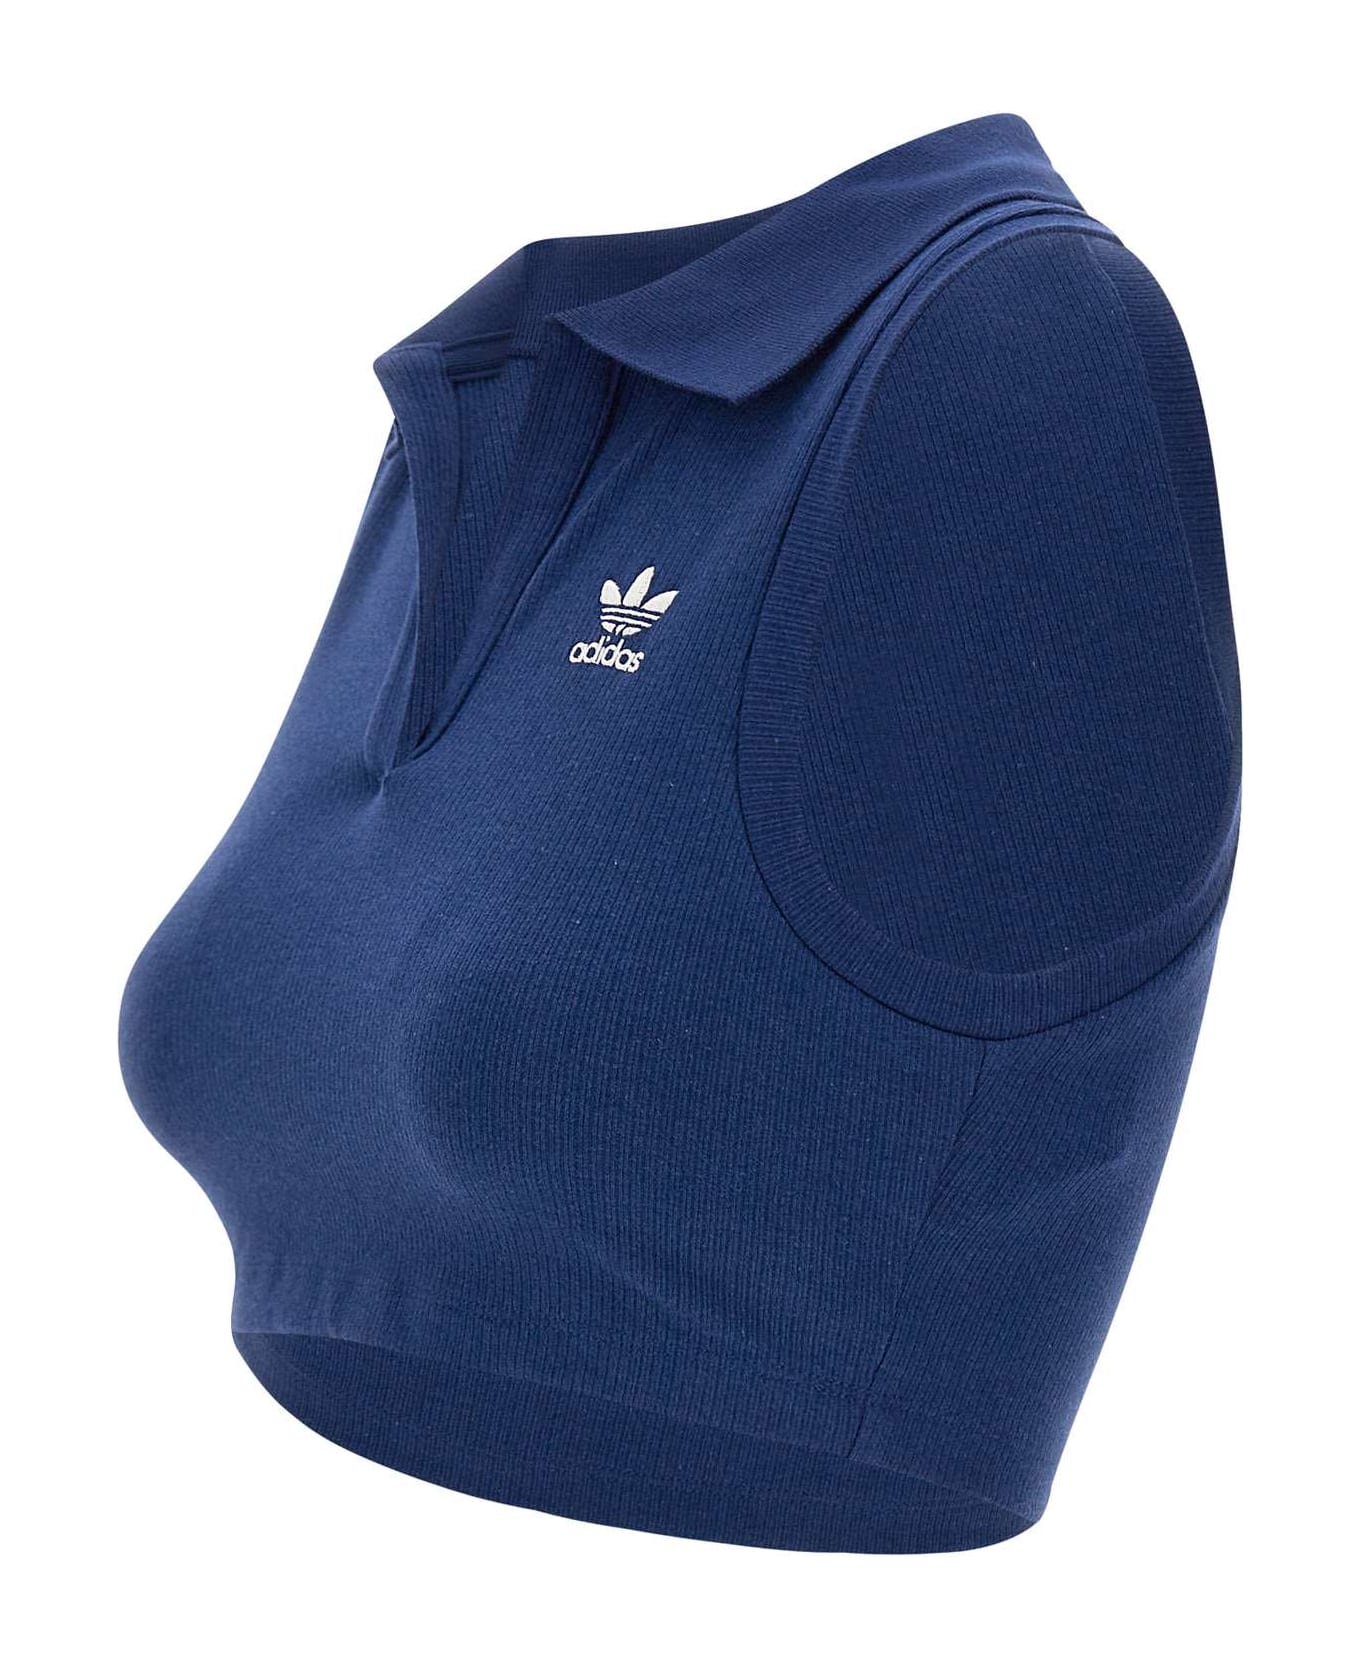 Adidas Cotton And Viscose Top - BLUE